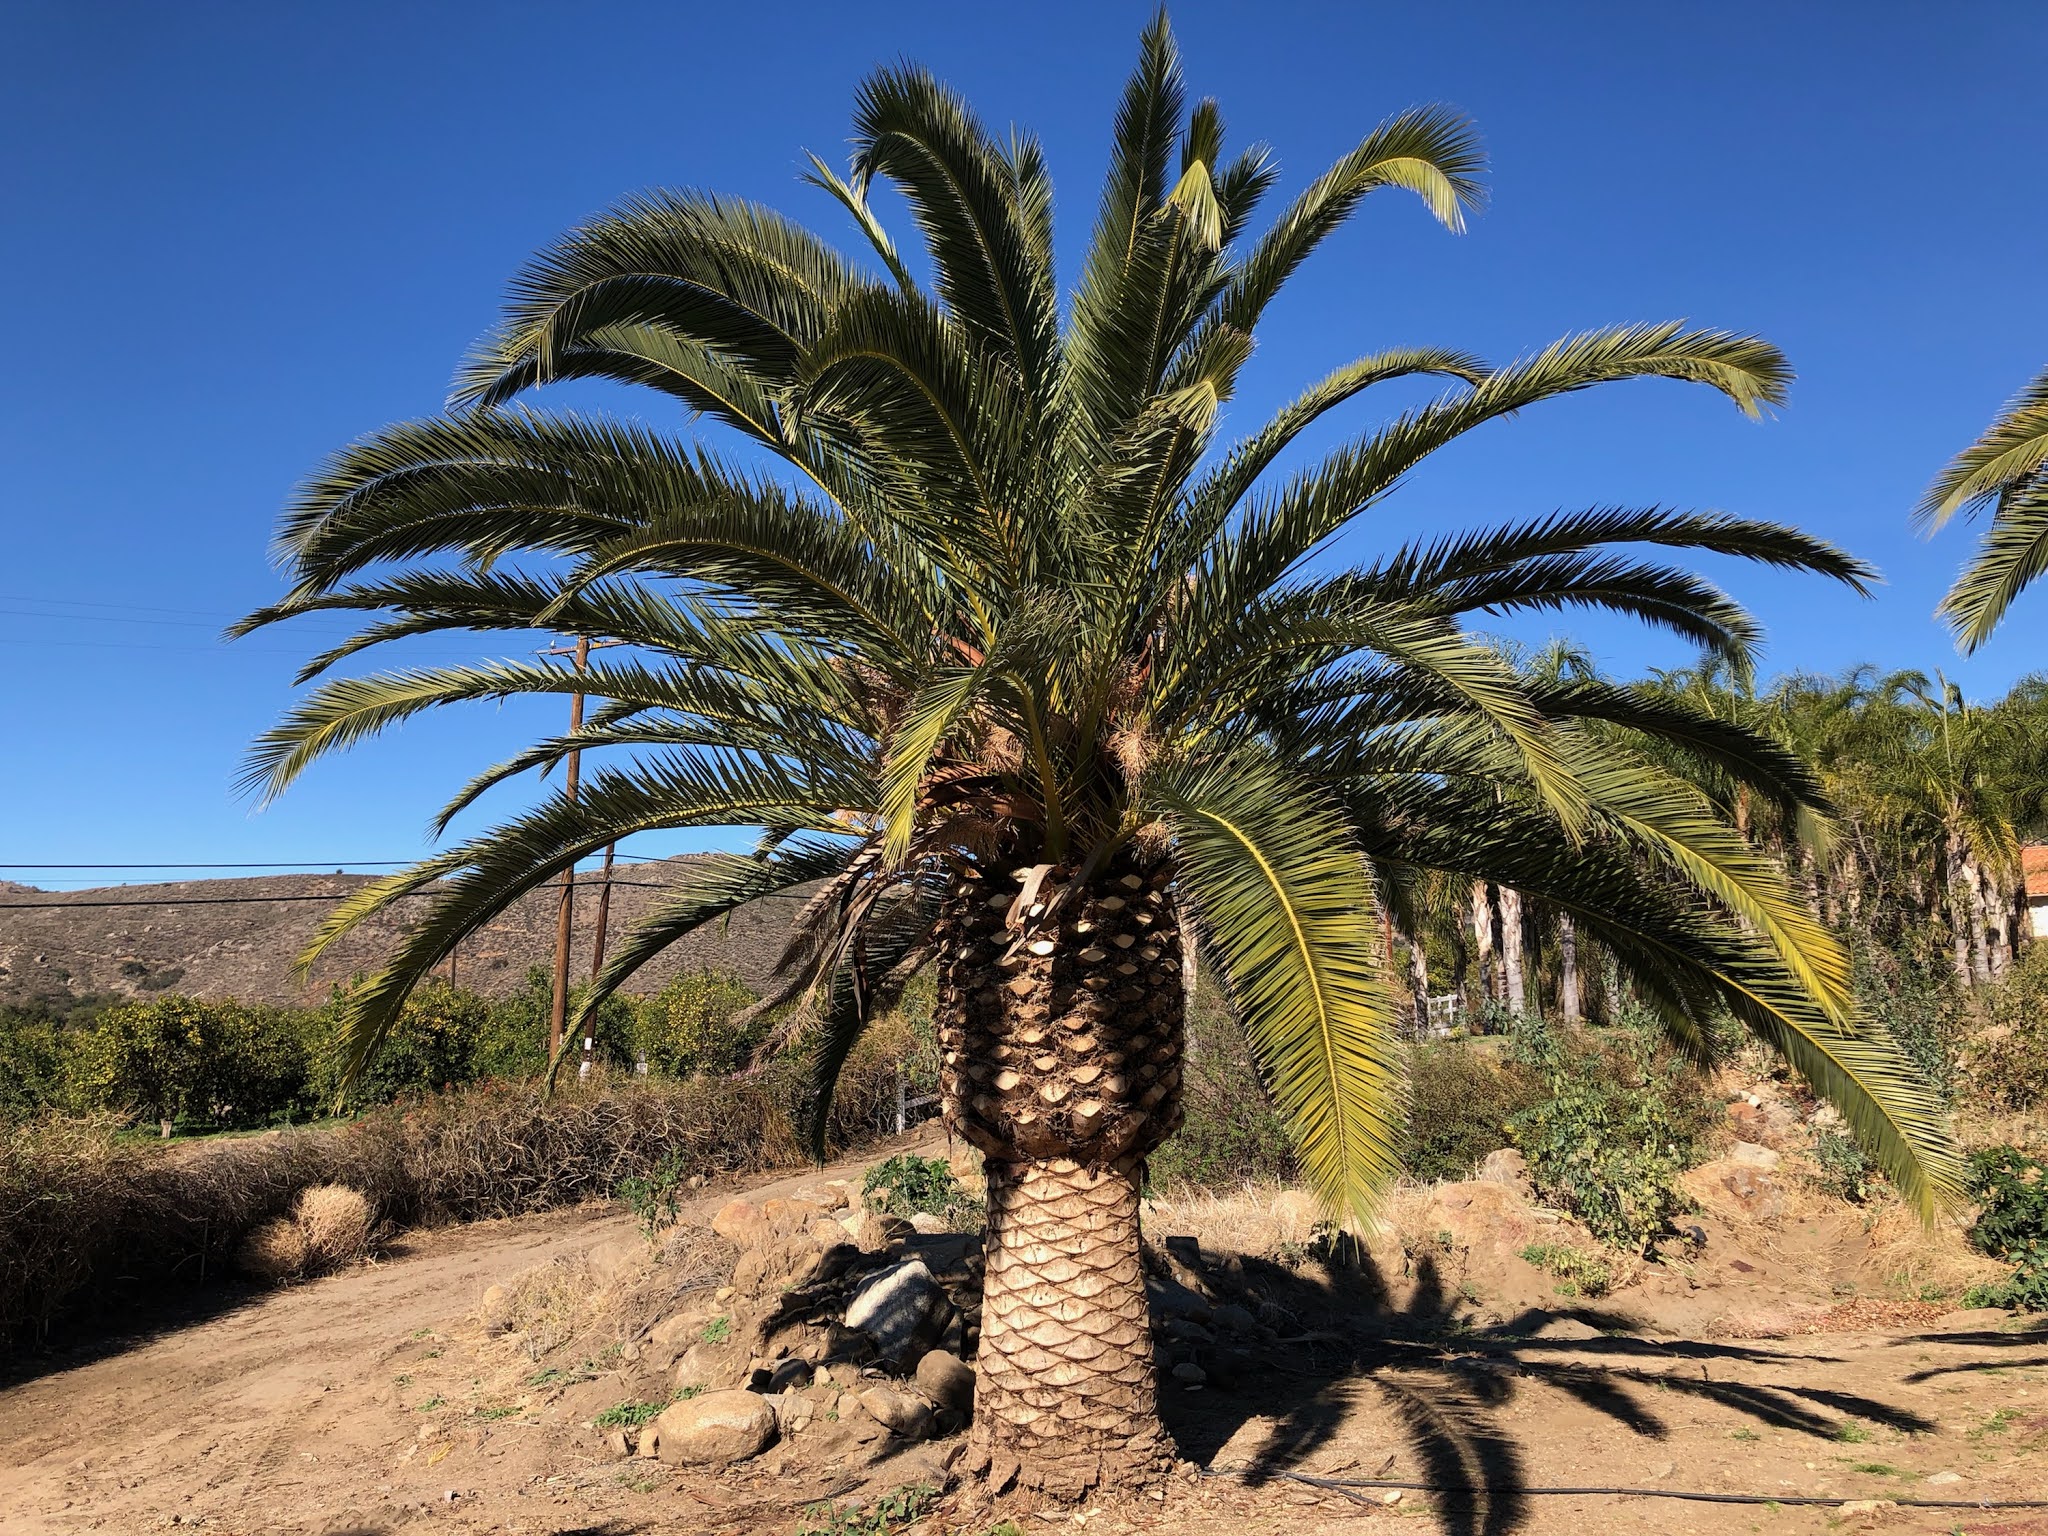 Estimating Palm Tree Age